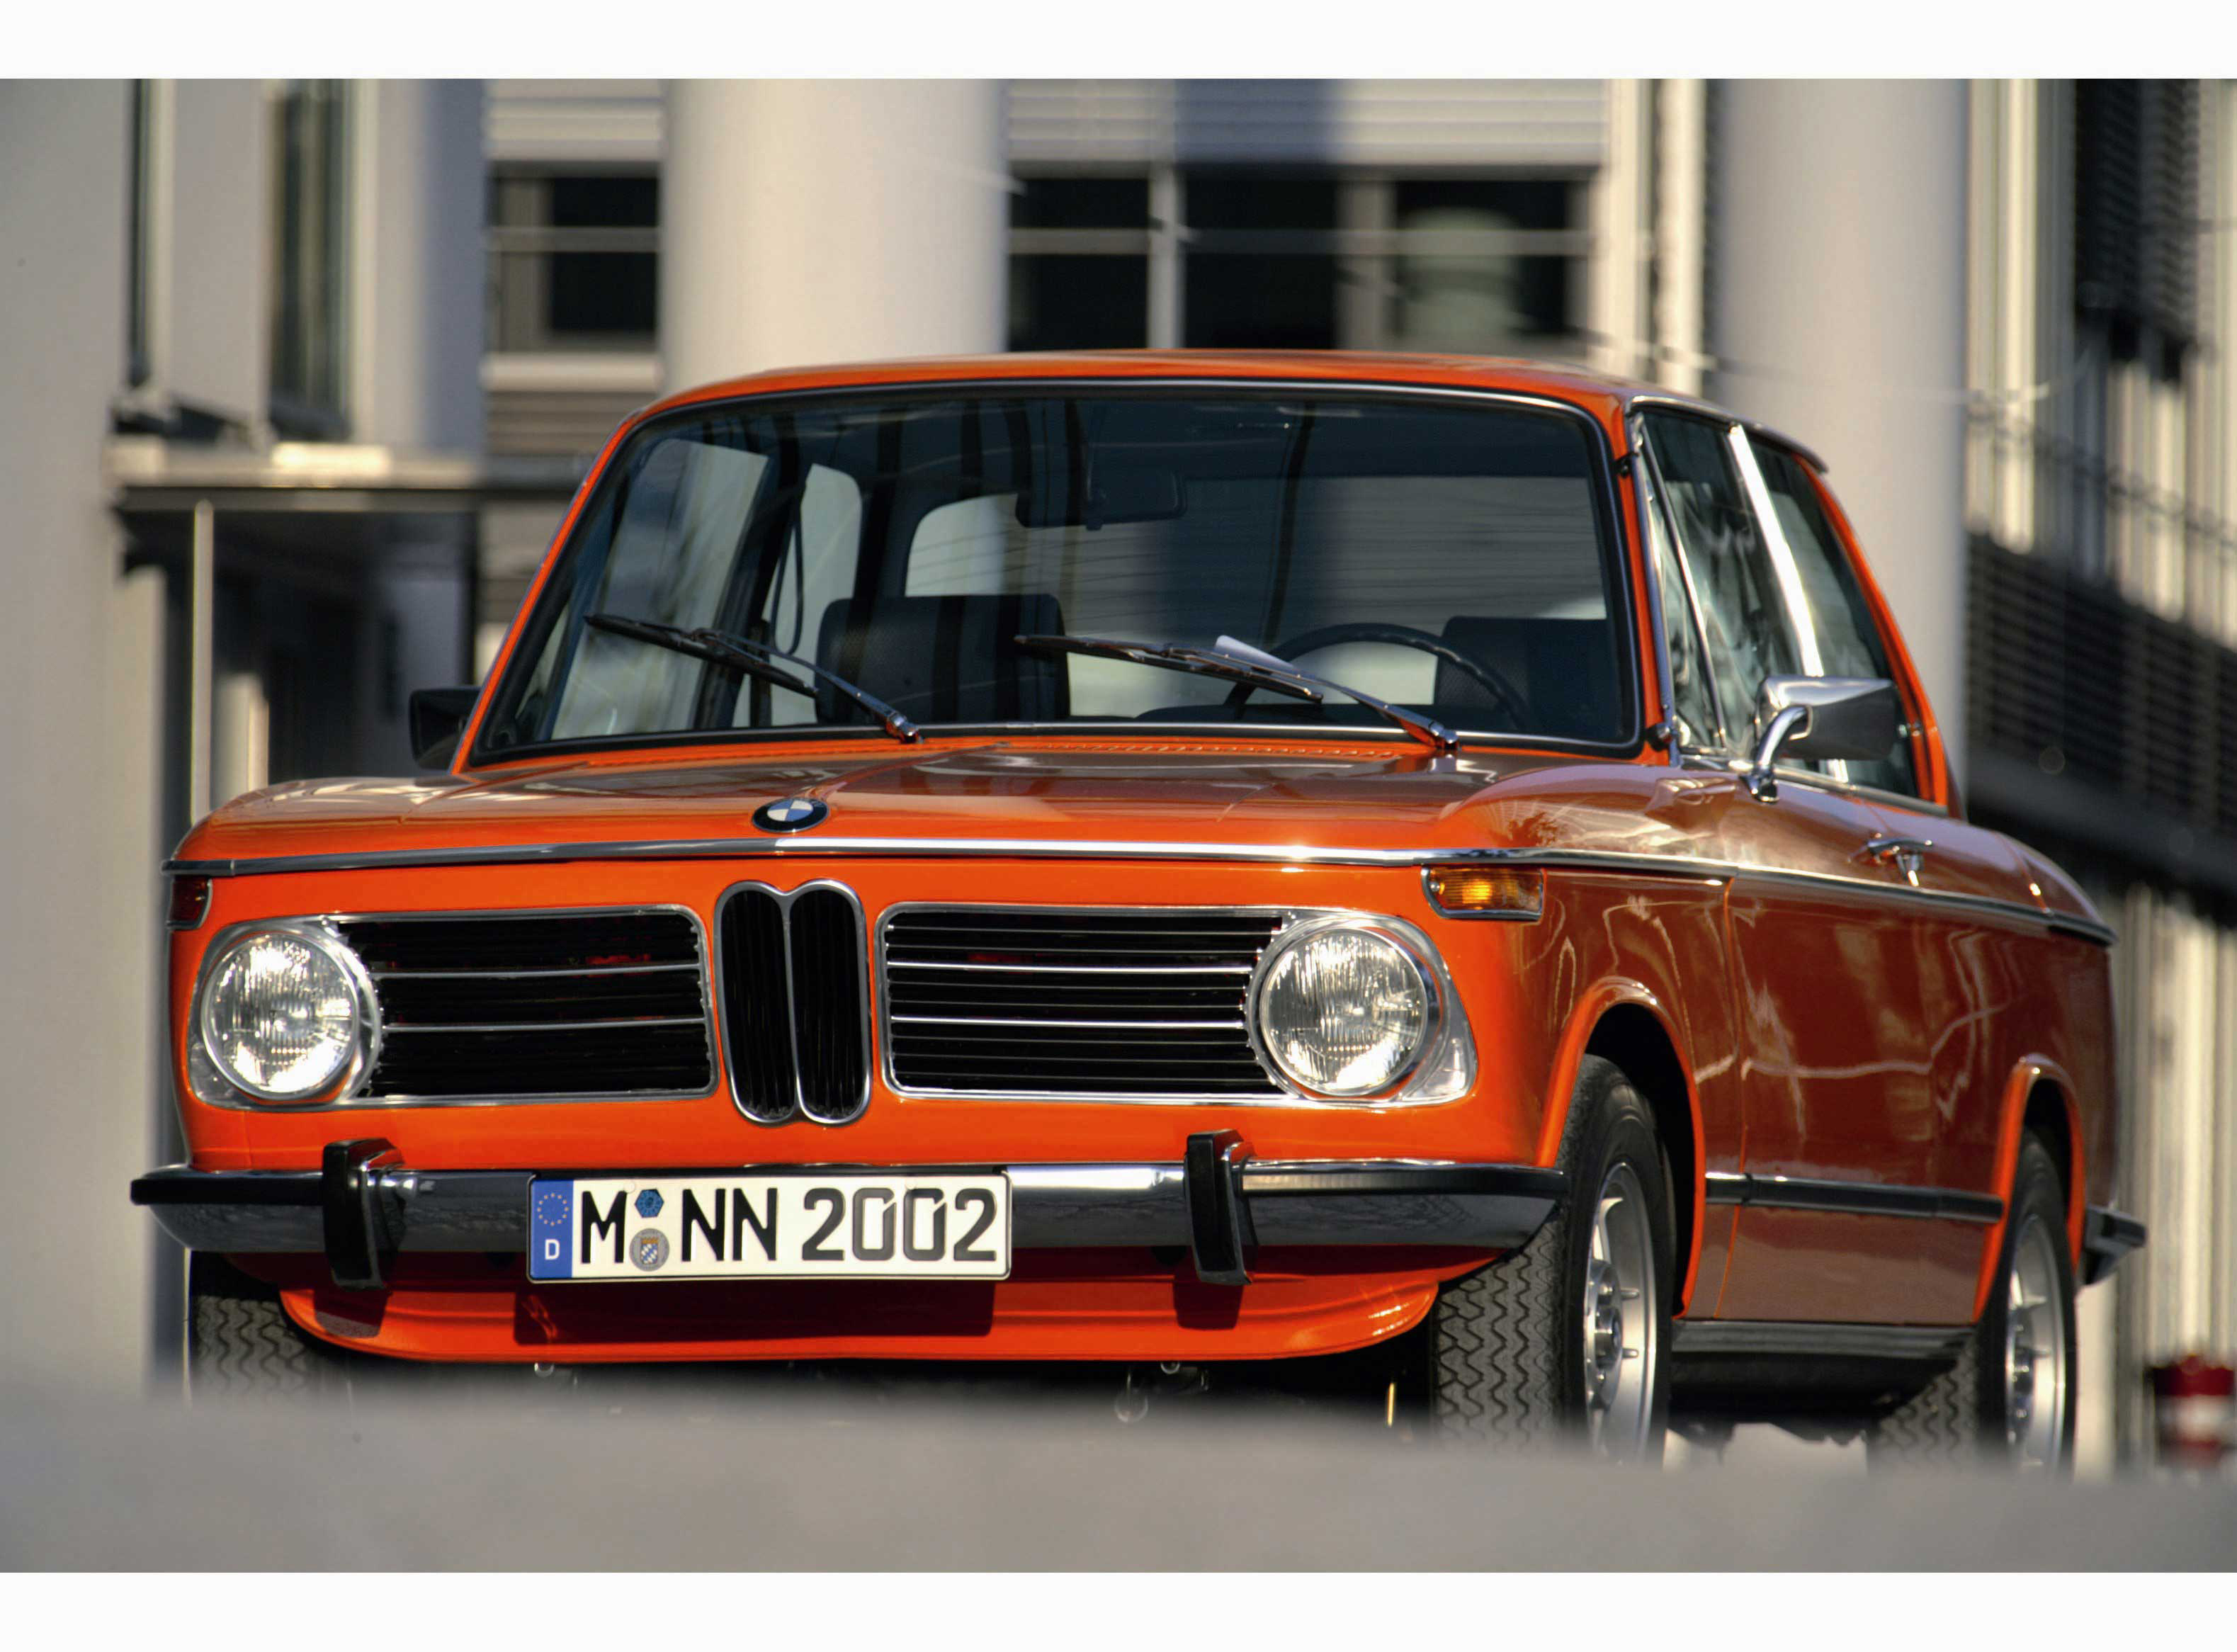 Retrospective: Driving Impressions of a BMW 2002